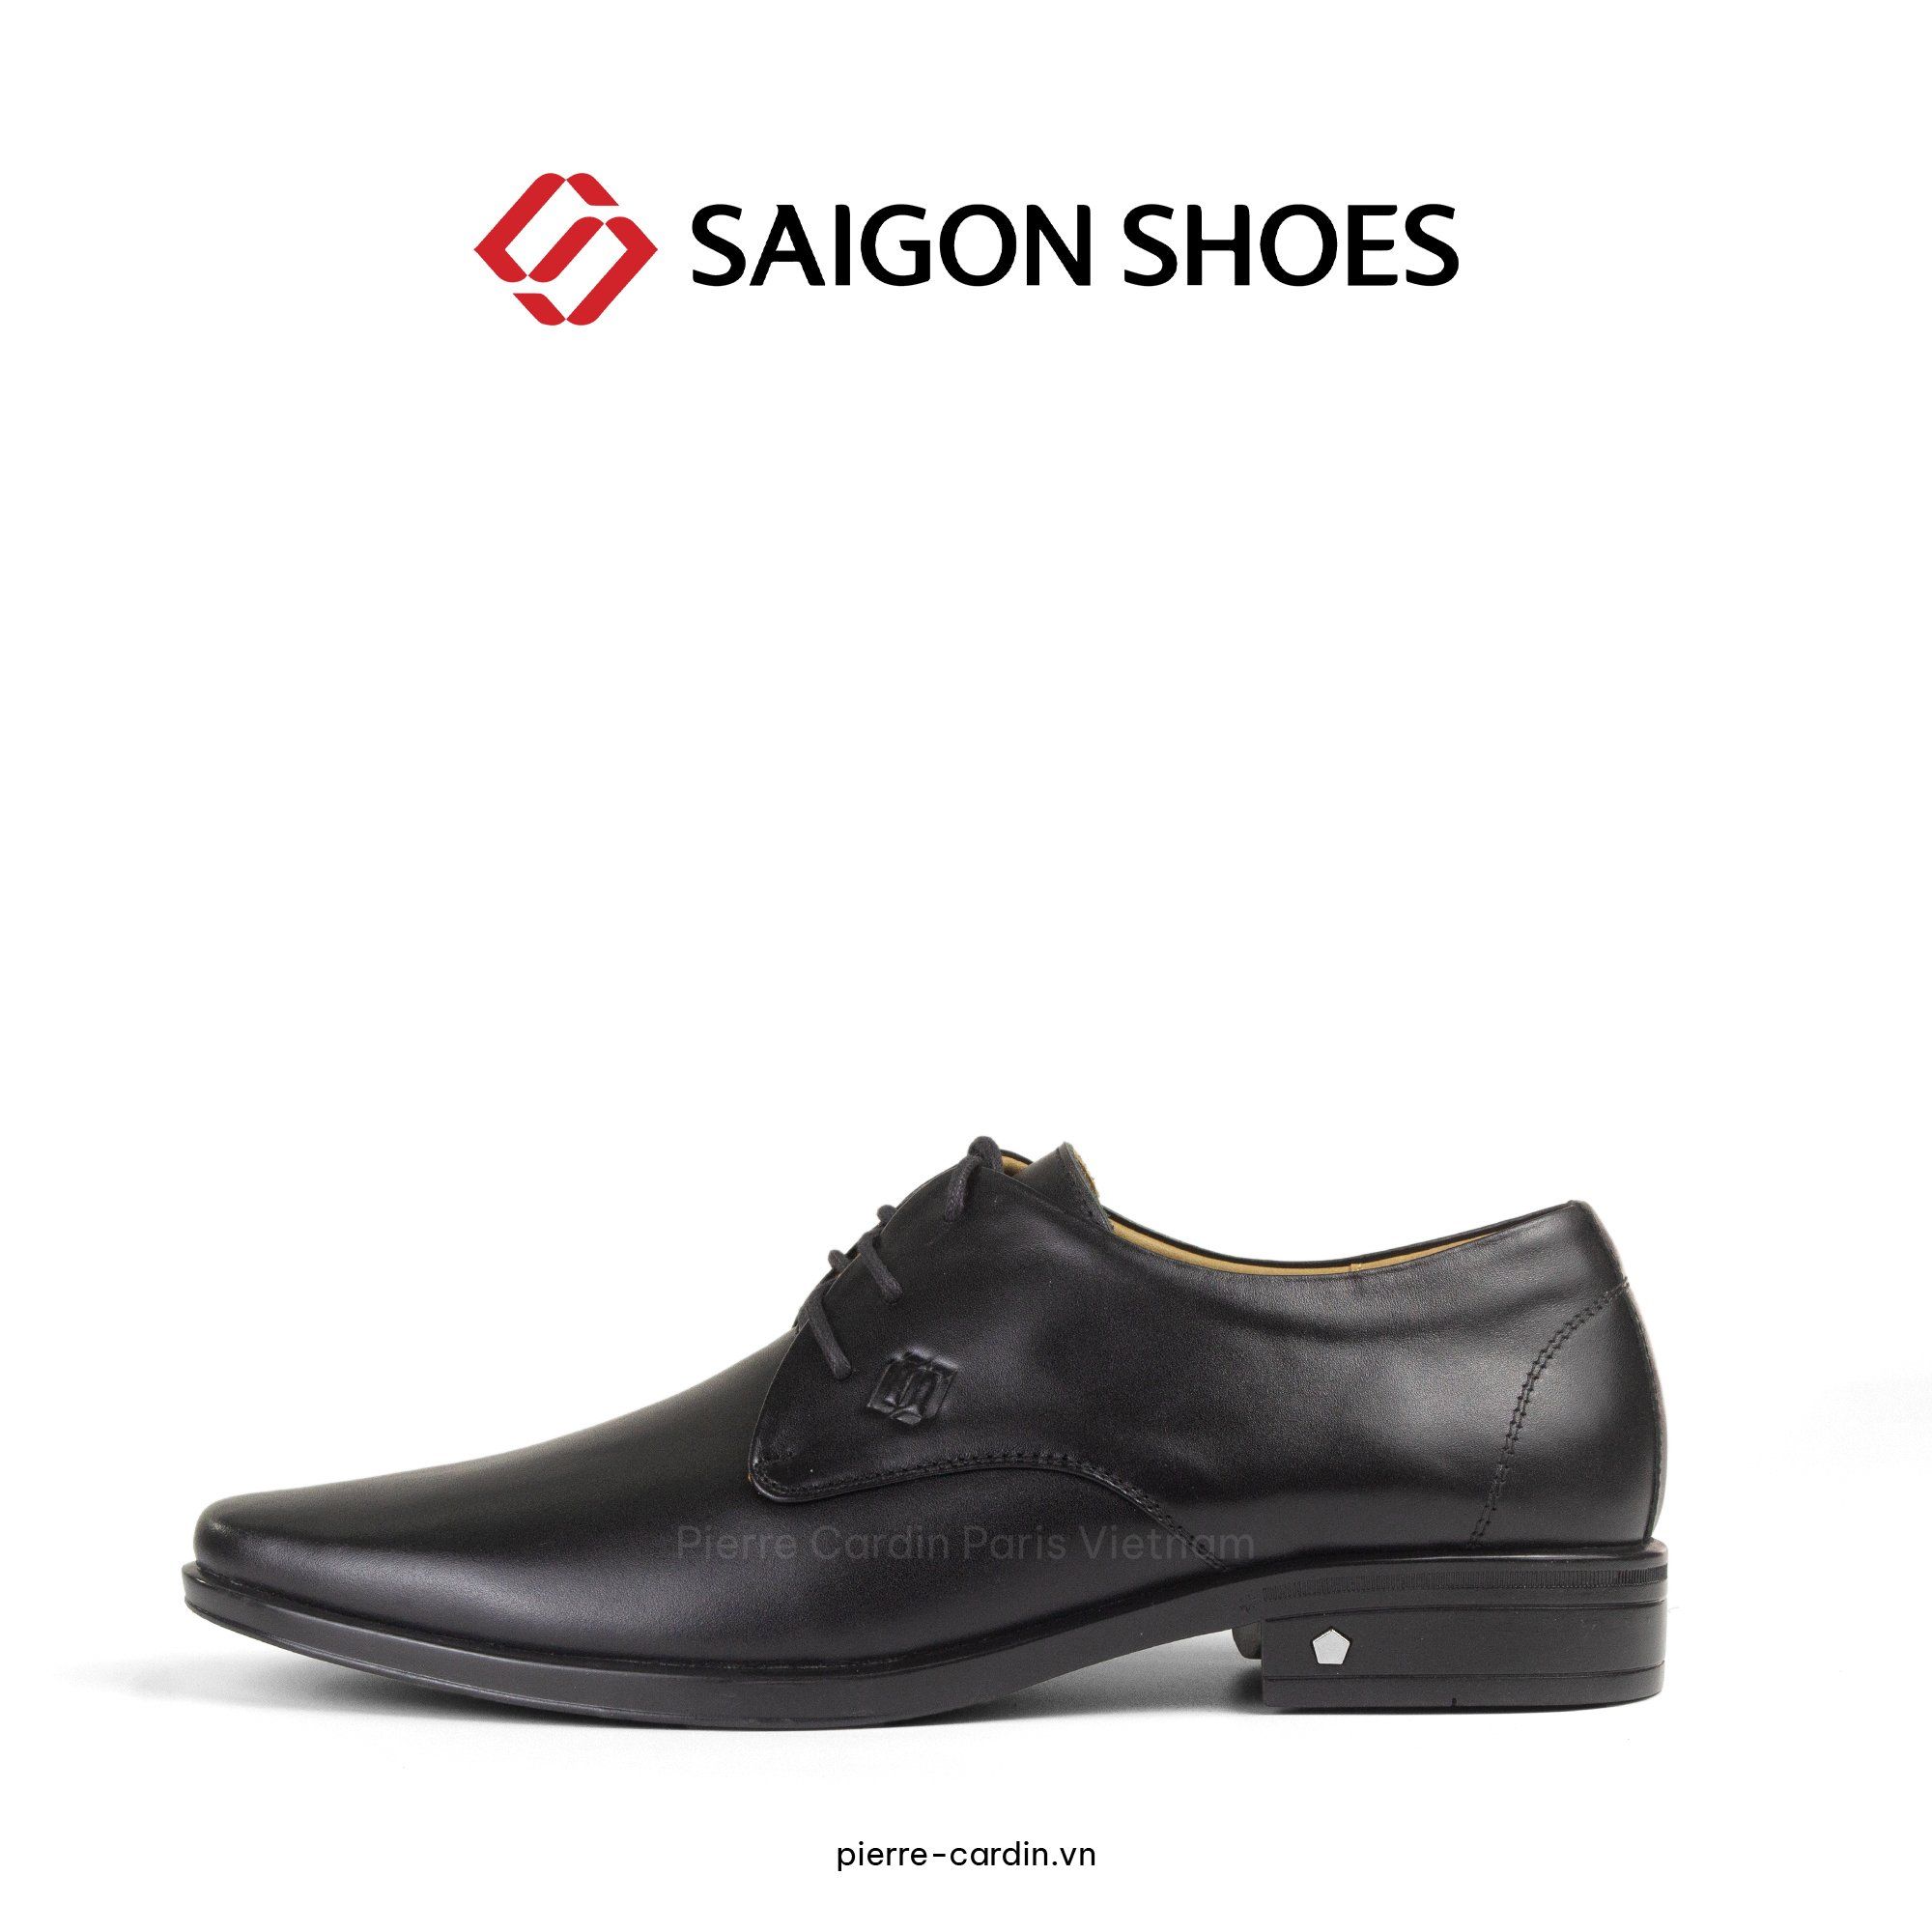 Pierre Cardin Paris Vietnam: Giày Derby Saigon Shoes - SGMFWLH 011